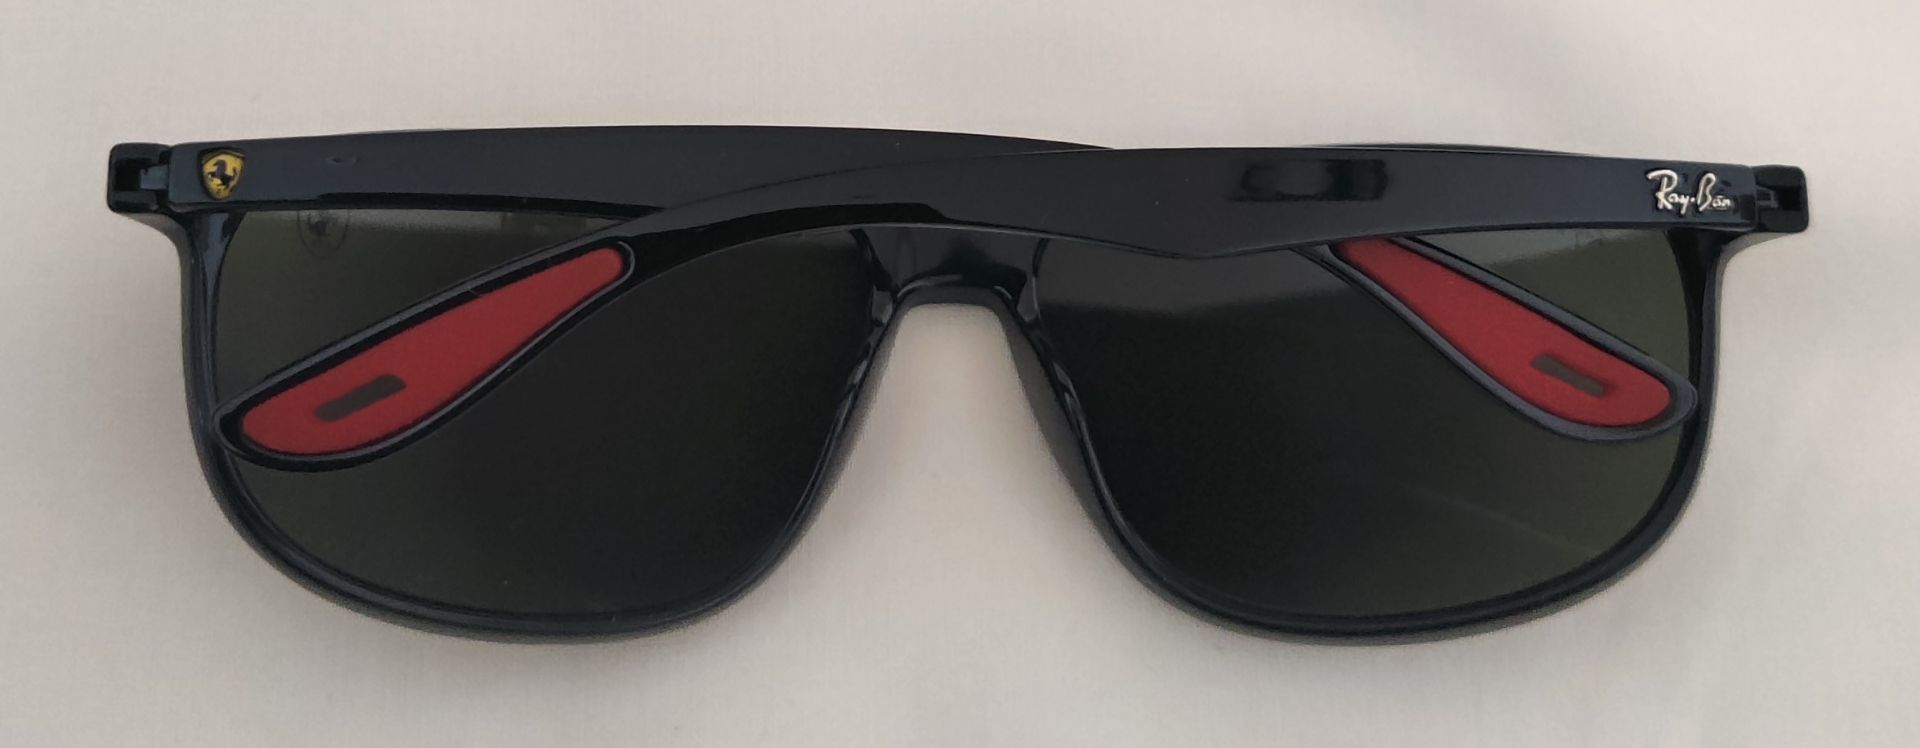 Ray Ban(Ferrari) Sunglasses ORB4213F 601/71 *3N - Image 3 of 4